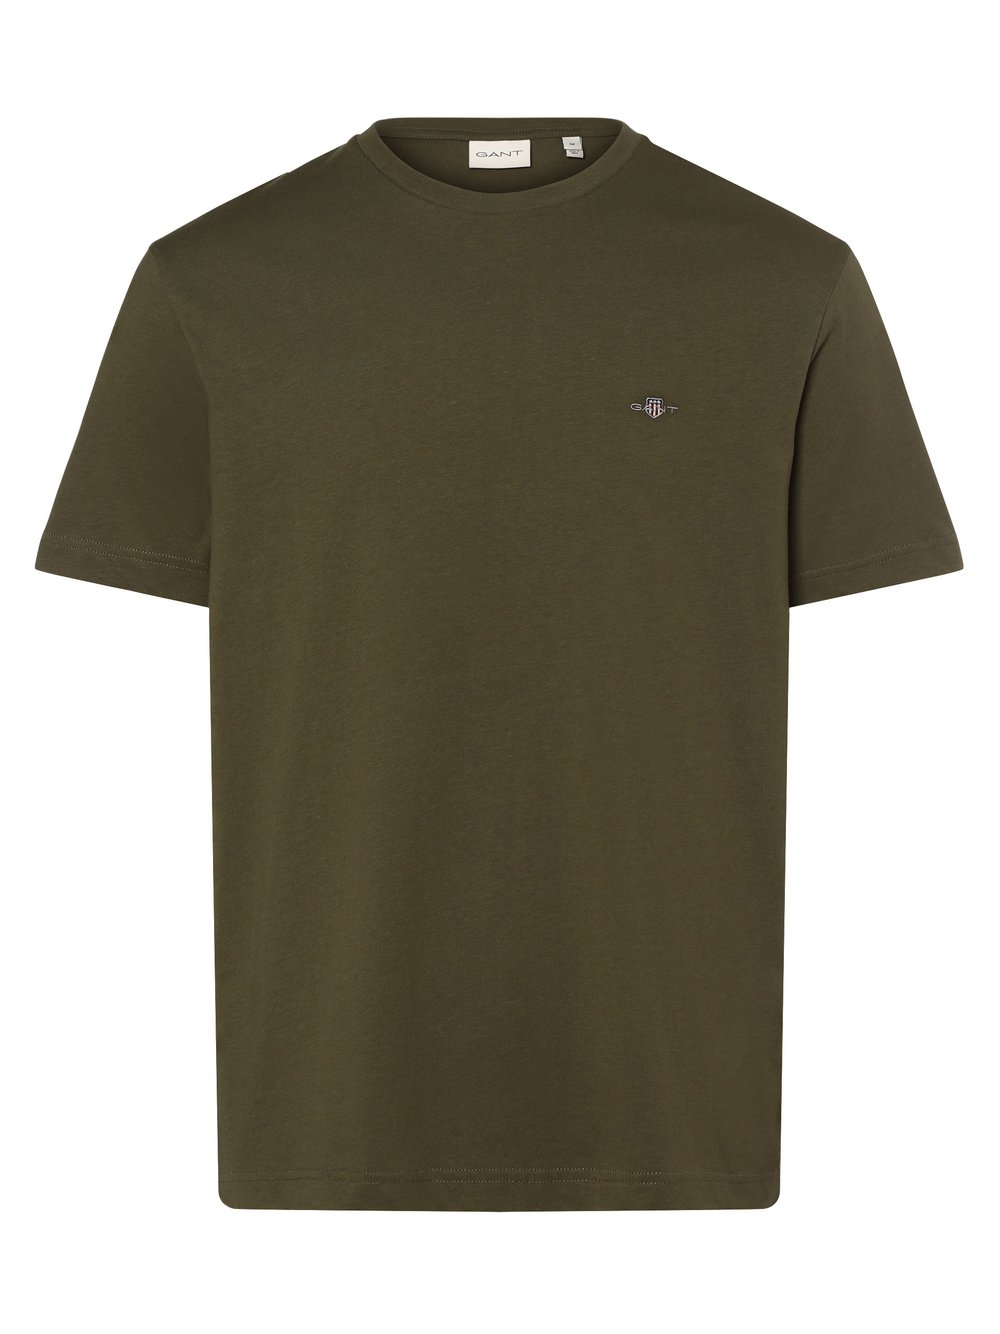 Gant - T-shirt męski, zielony